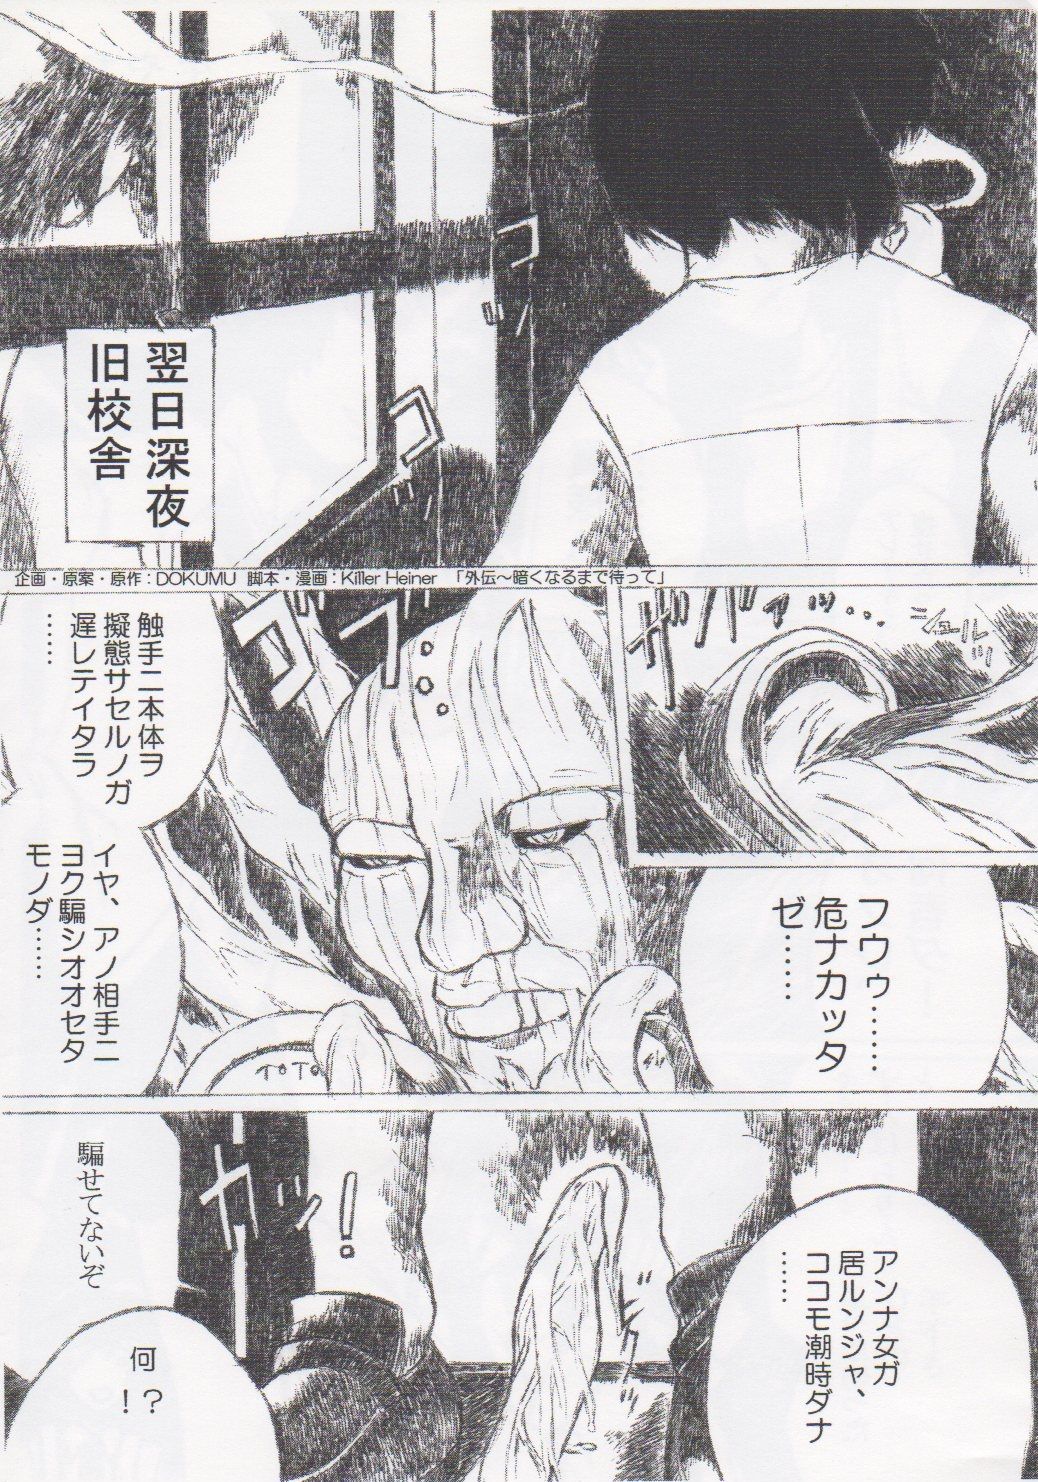 (ComiComi13) [Haikousha (DOKUMU, Killer Heiner)] Houkago Taima Club (コミコミ13) [廃校舎 (DOKUMU, Killer Heiner)] 放課後退魔クラブ